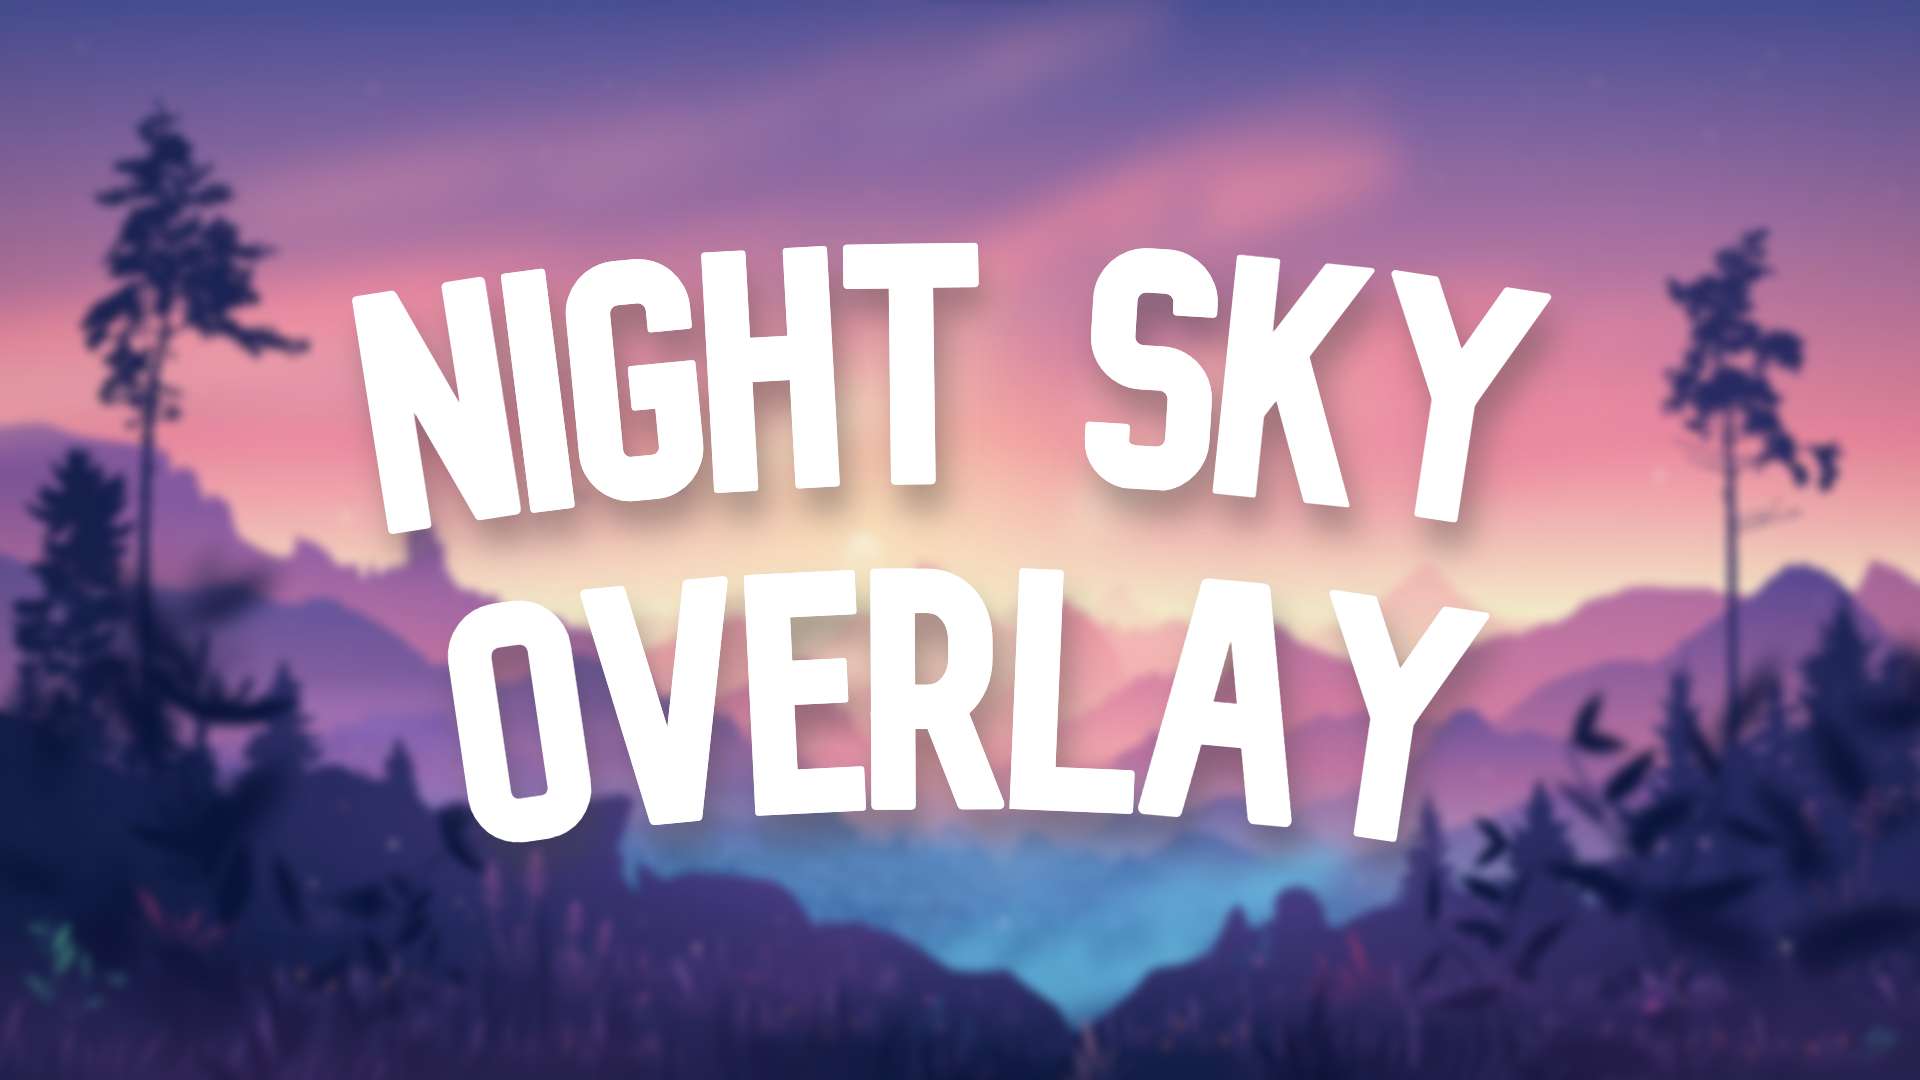 Night Sky Overlay #1 16 by rh56 on PvPRP